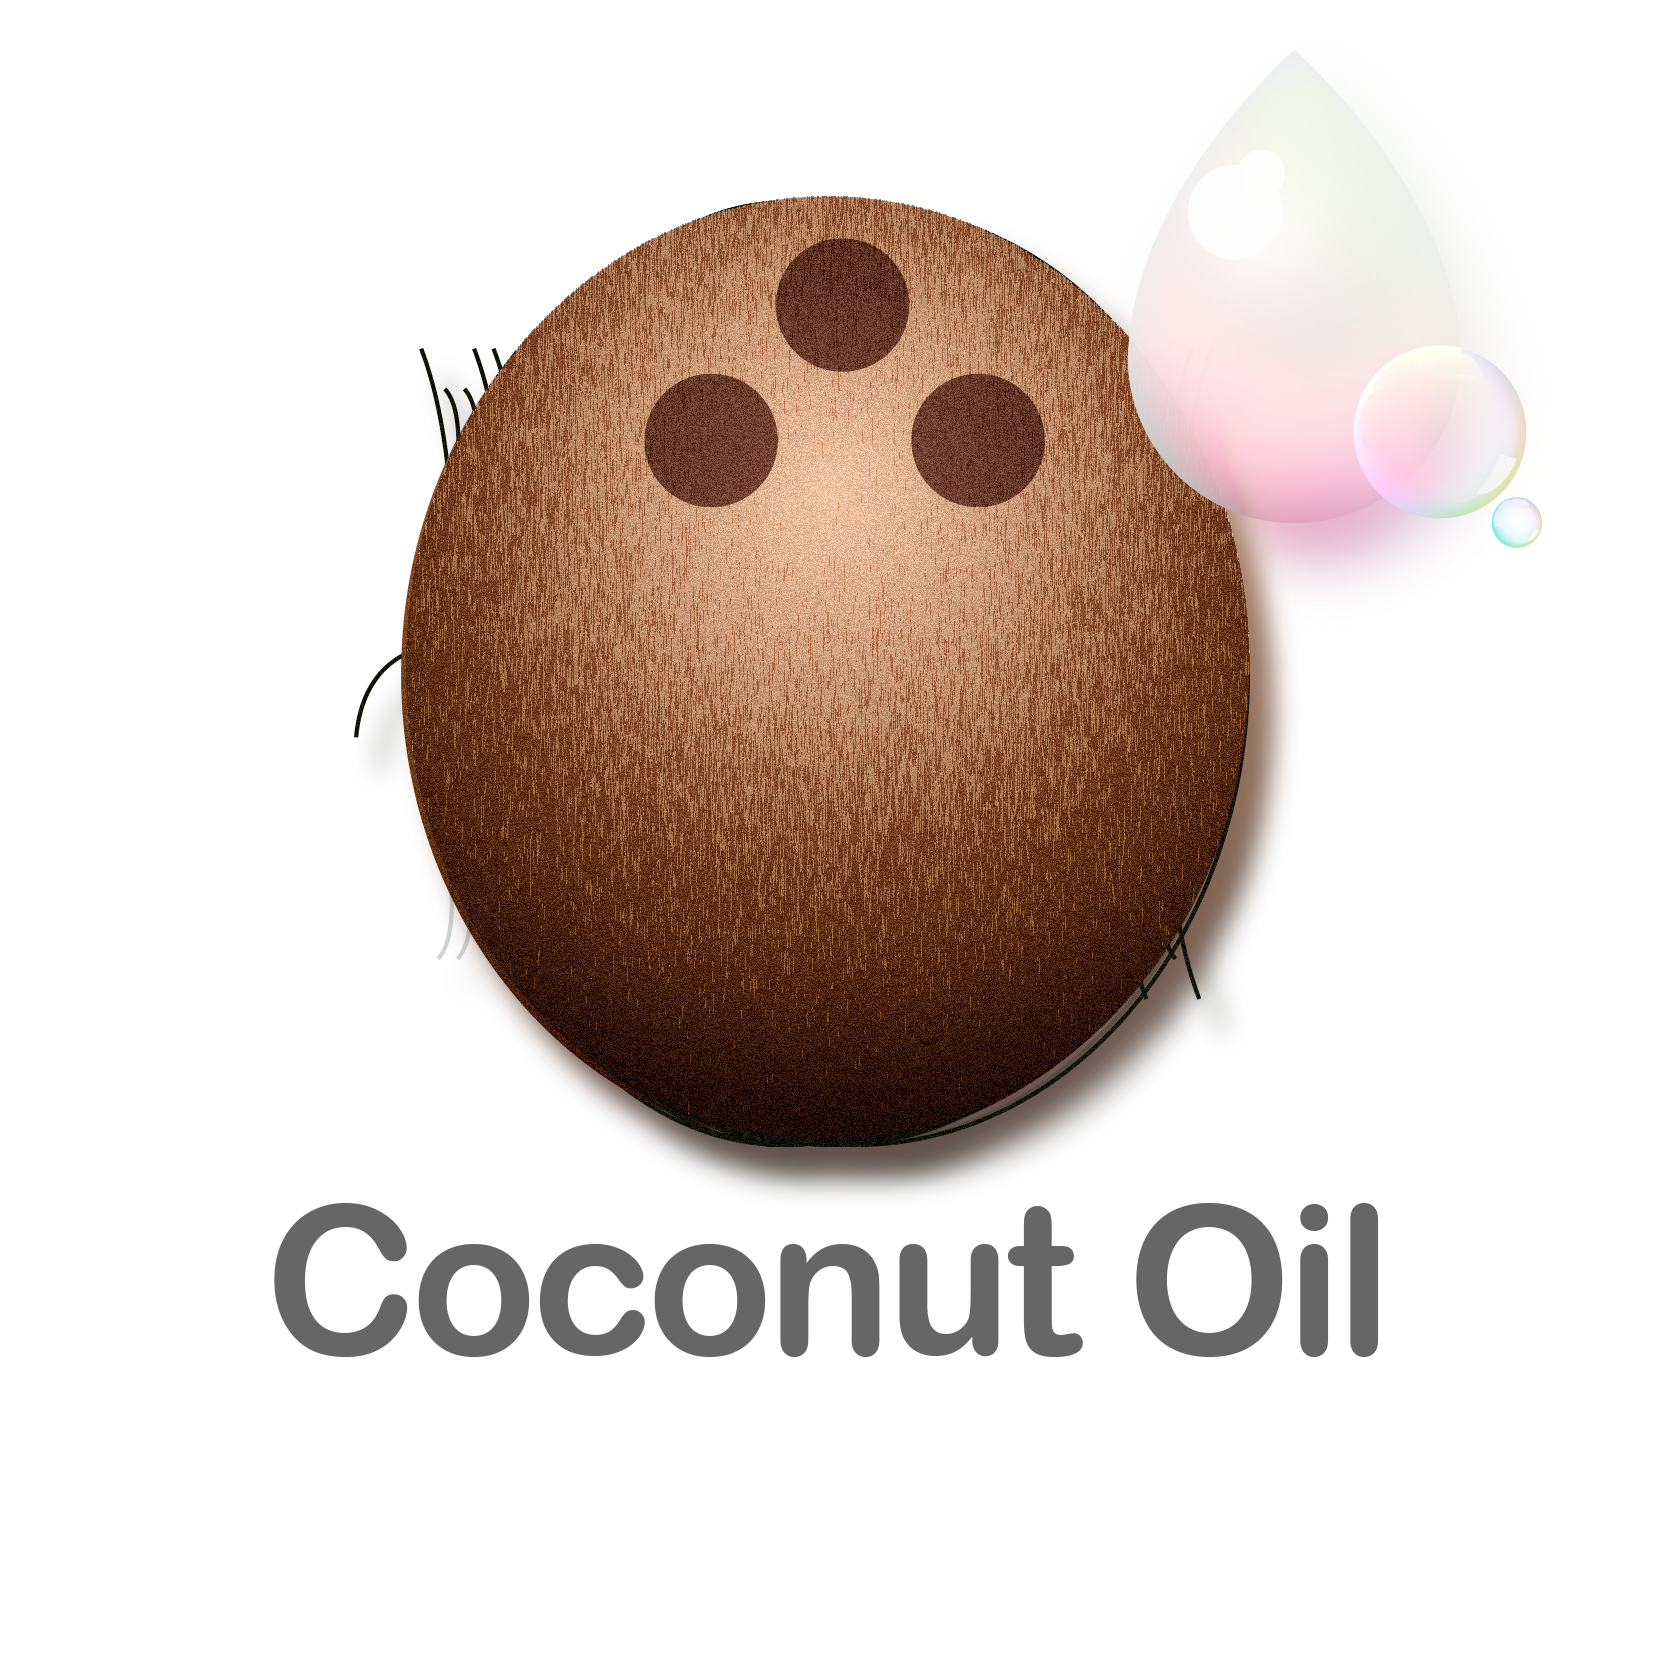 Coconut Oil (Copy)